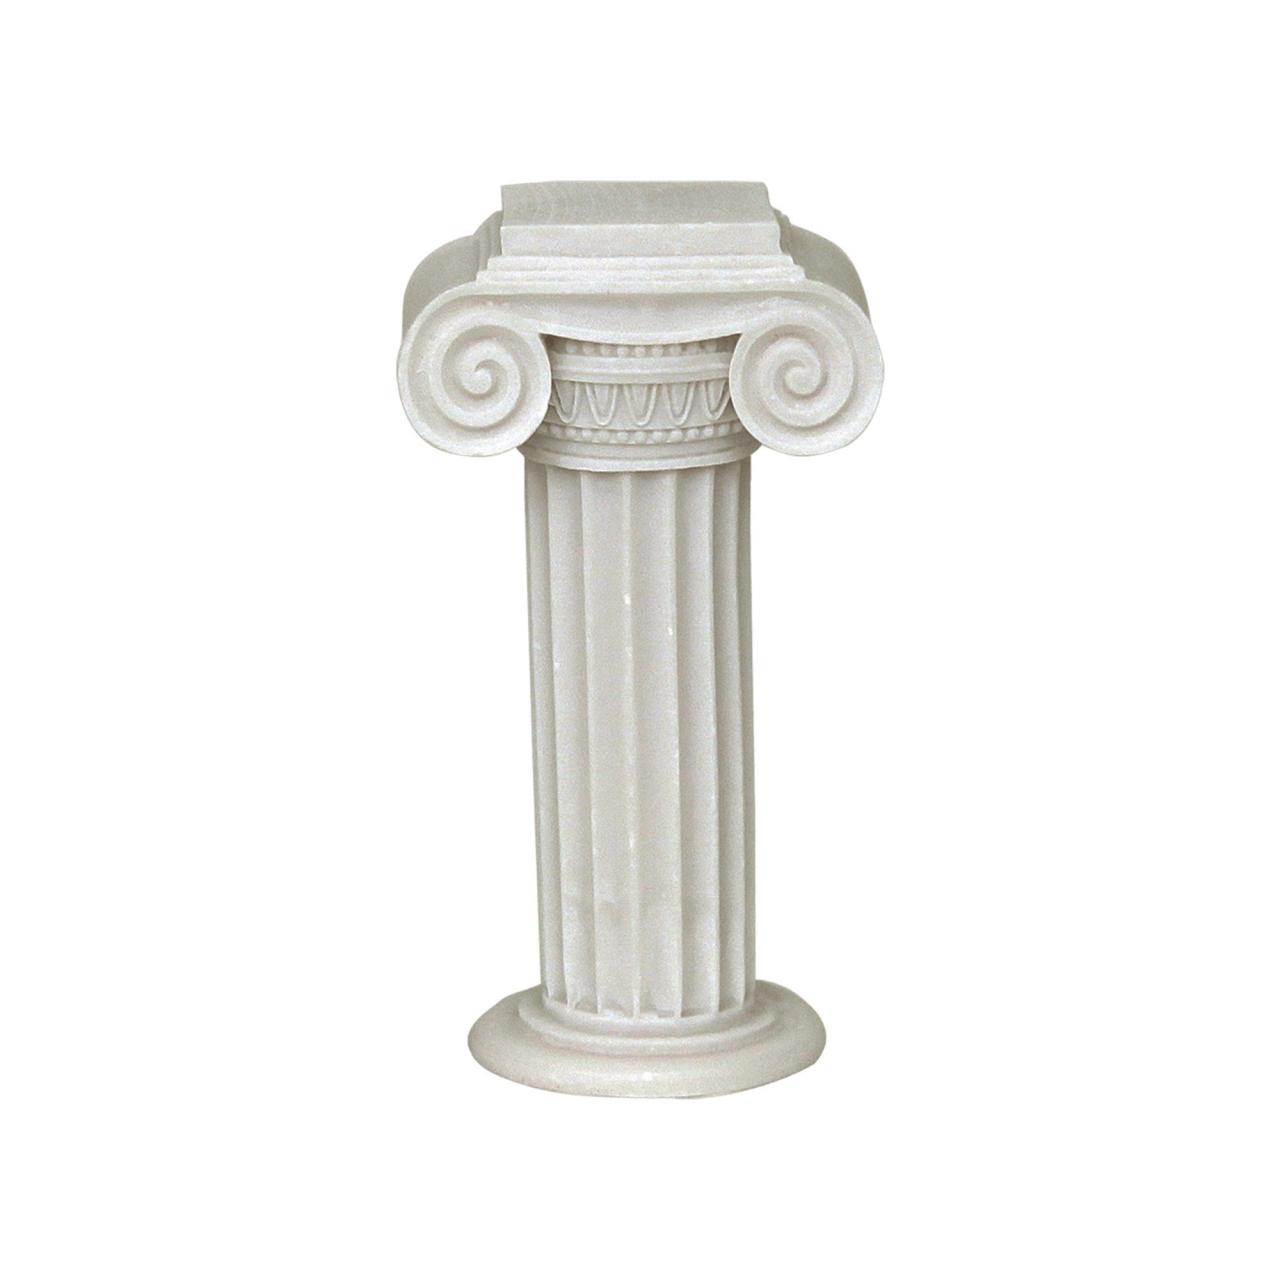 Greek Ionic Column Sculpture Handmade Alabaster Replica Statue 13cm - 5.12"